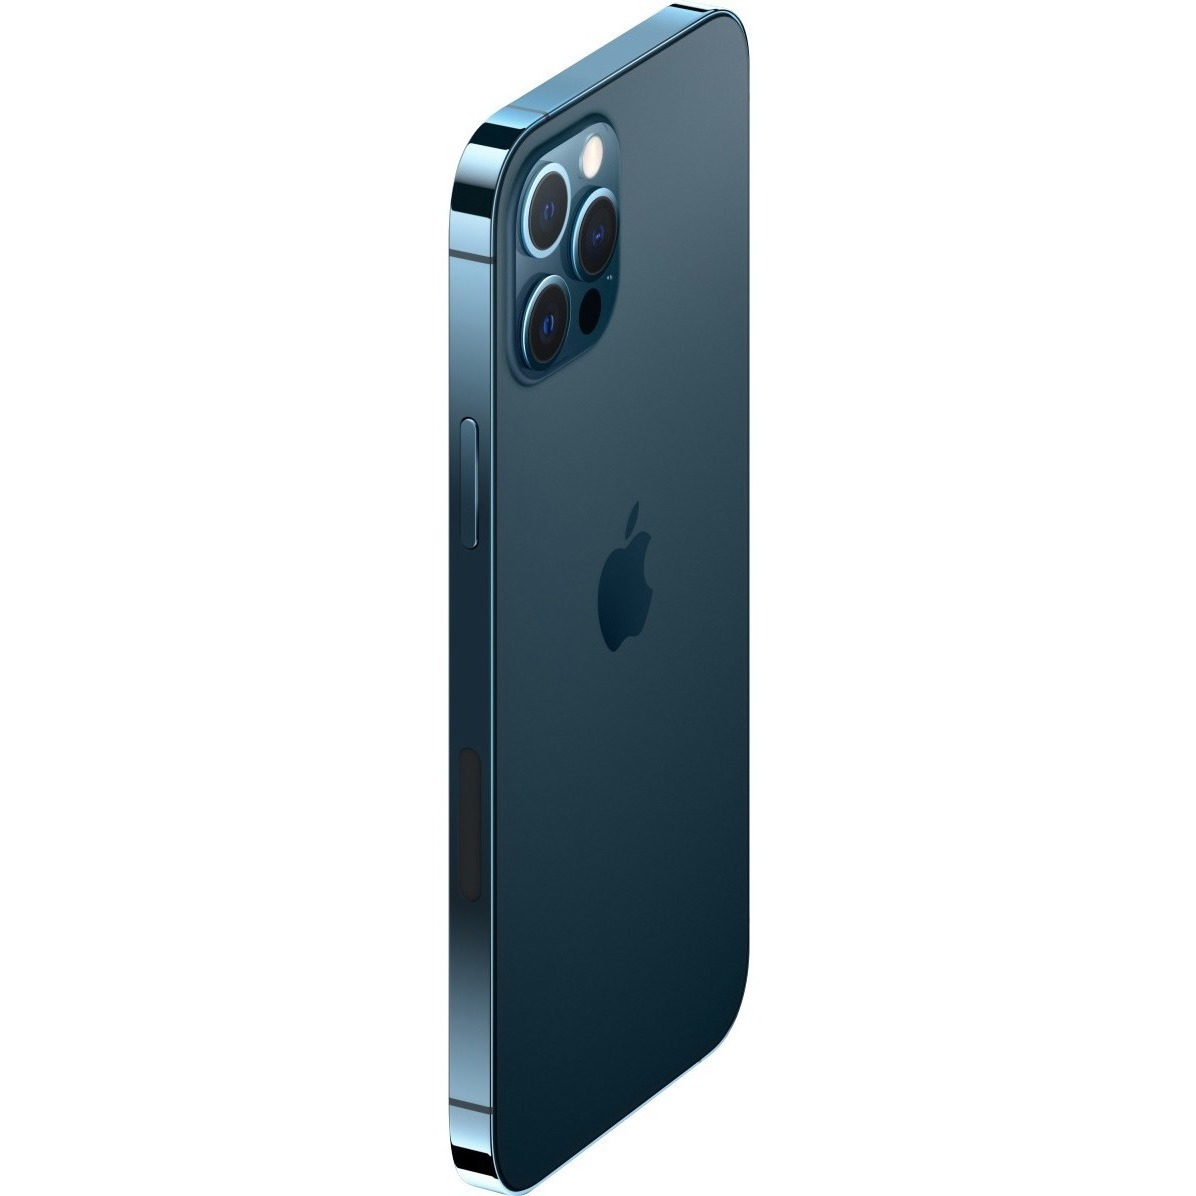 Apple iPhone 12 Pro A2406 256 GB Smartphone - 6.1